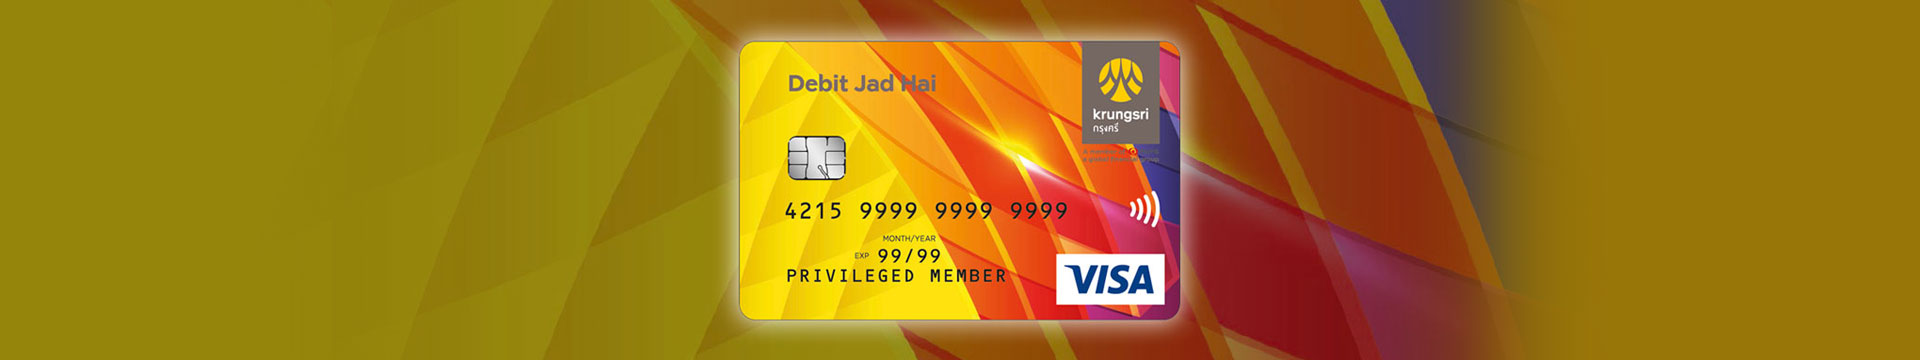 Krungsri Jad Hai Savings Debit Card